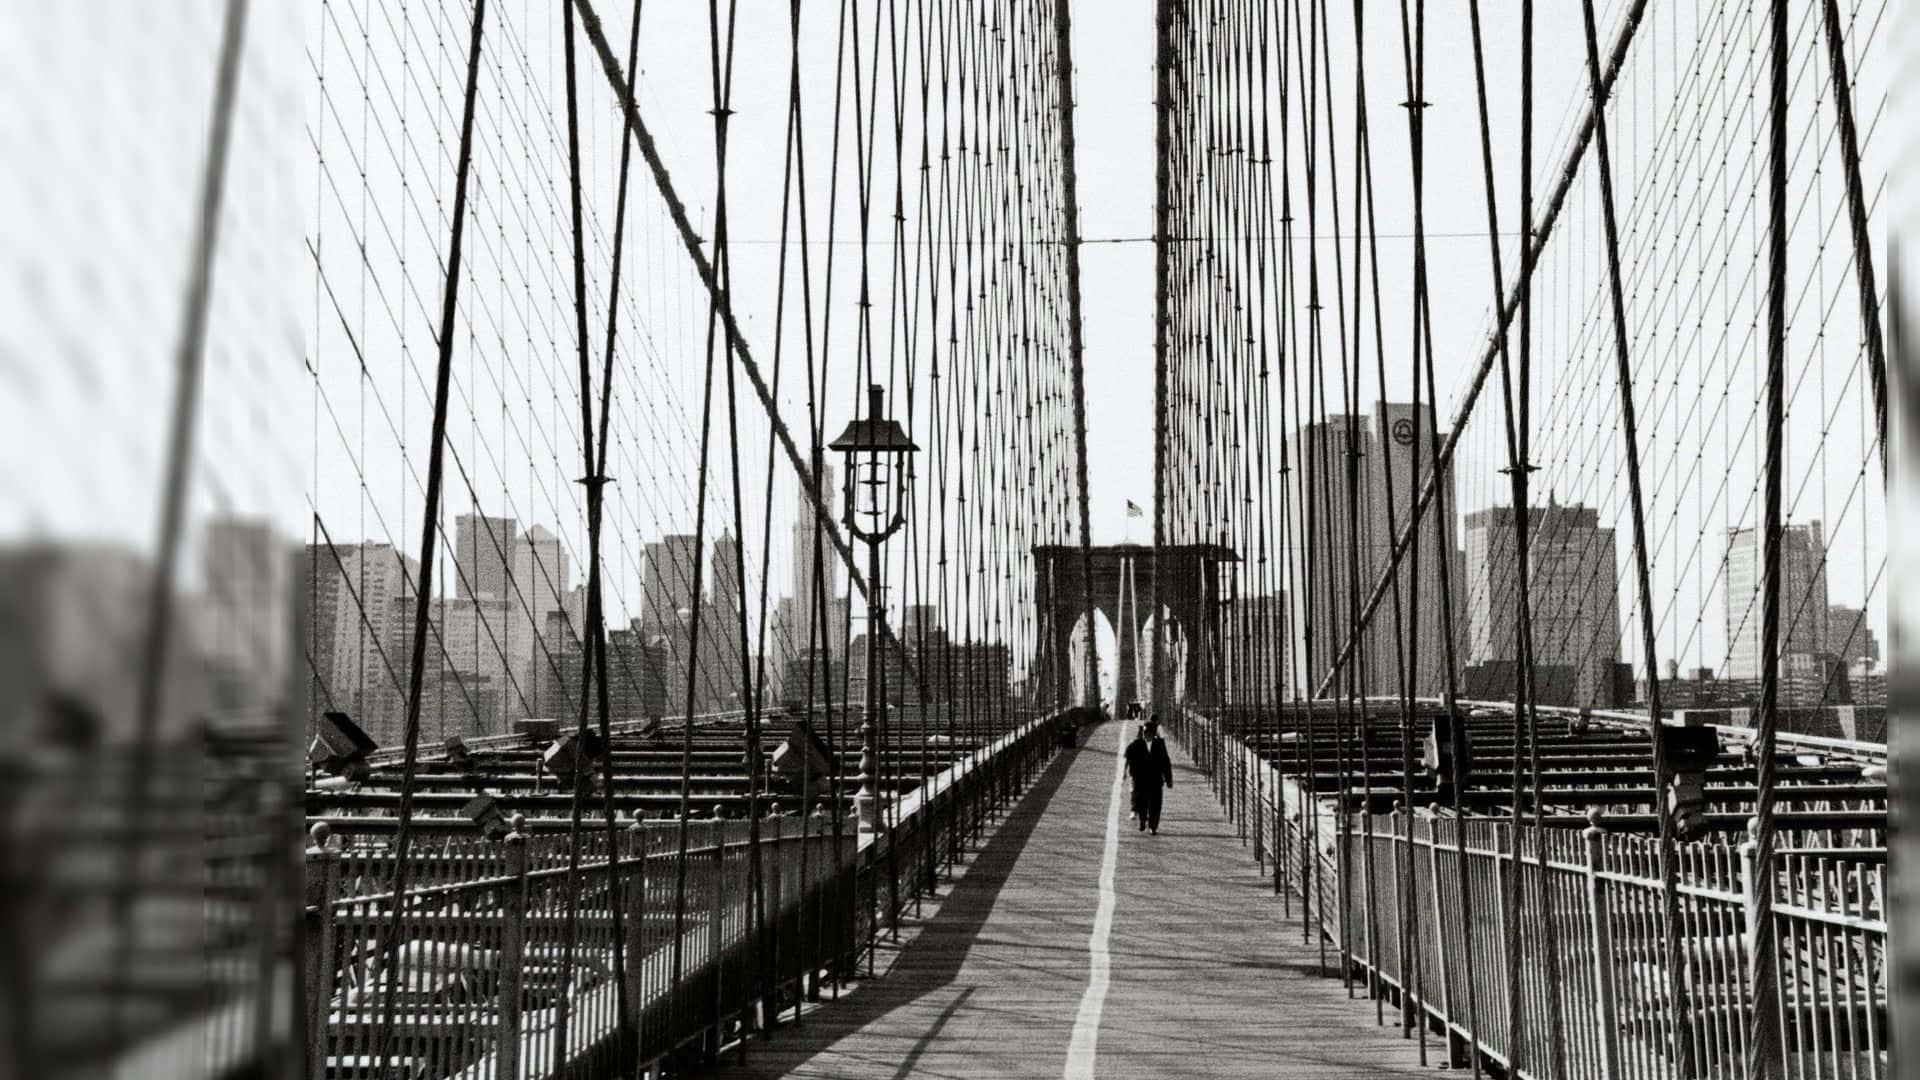 Hintergrundbildvon New York City